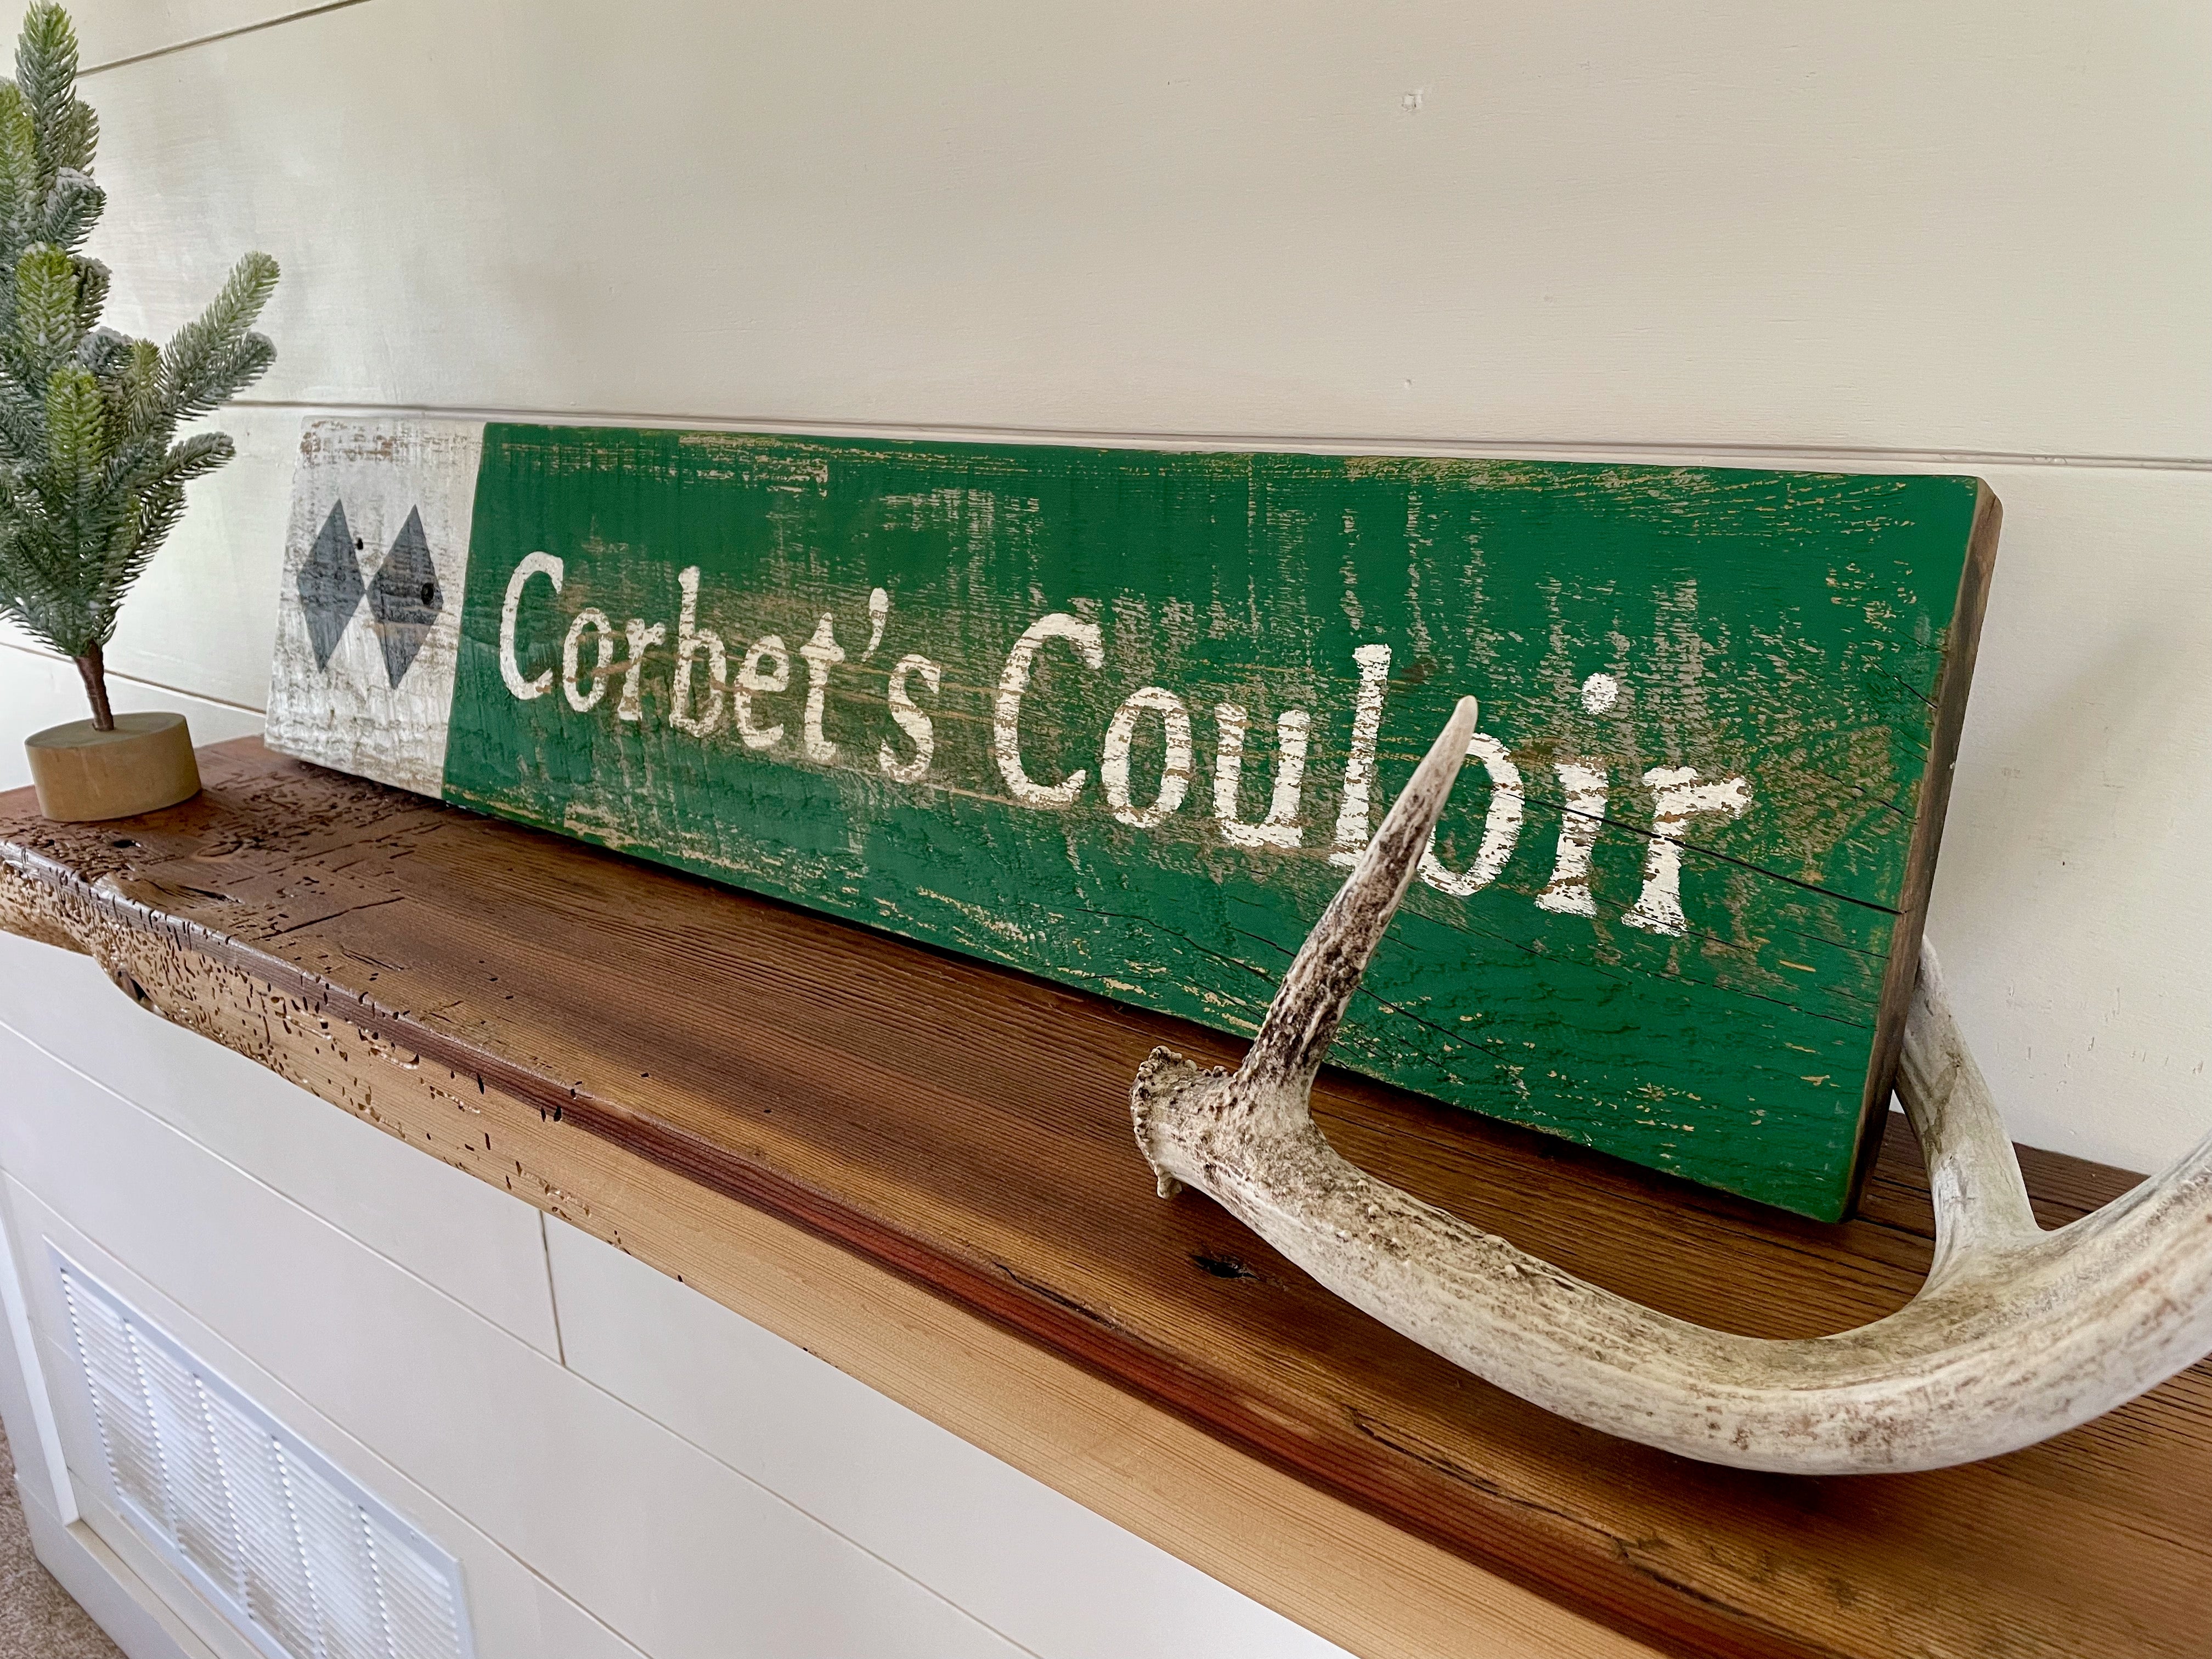 Corbet's Couloir Barnwood Sign